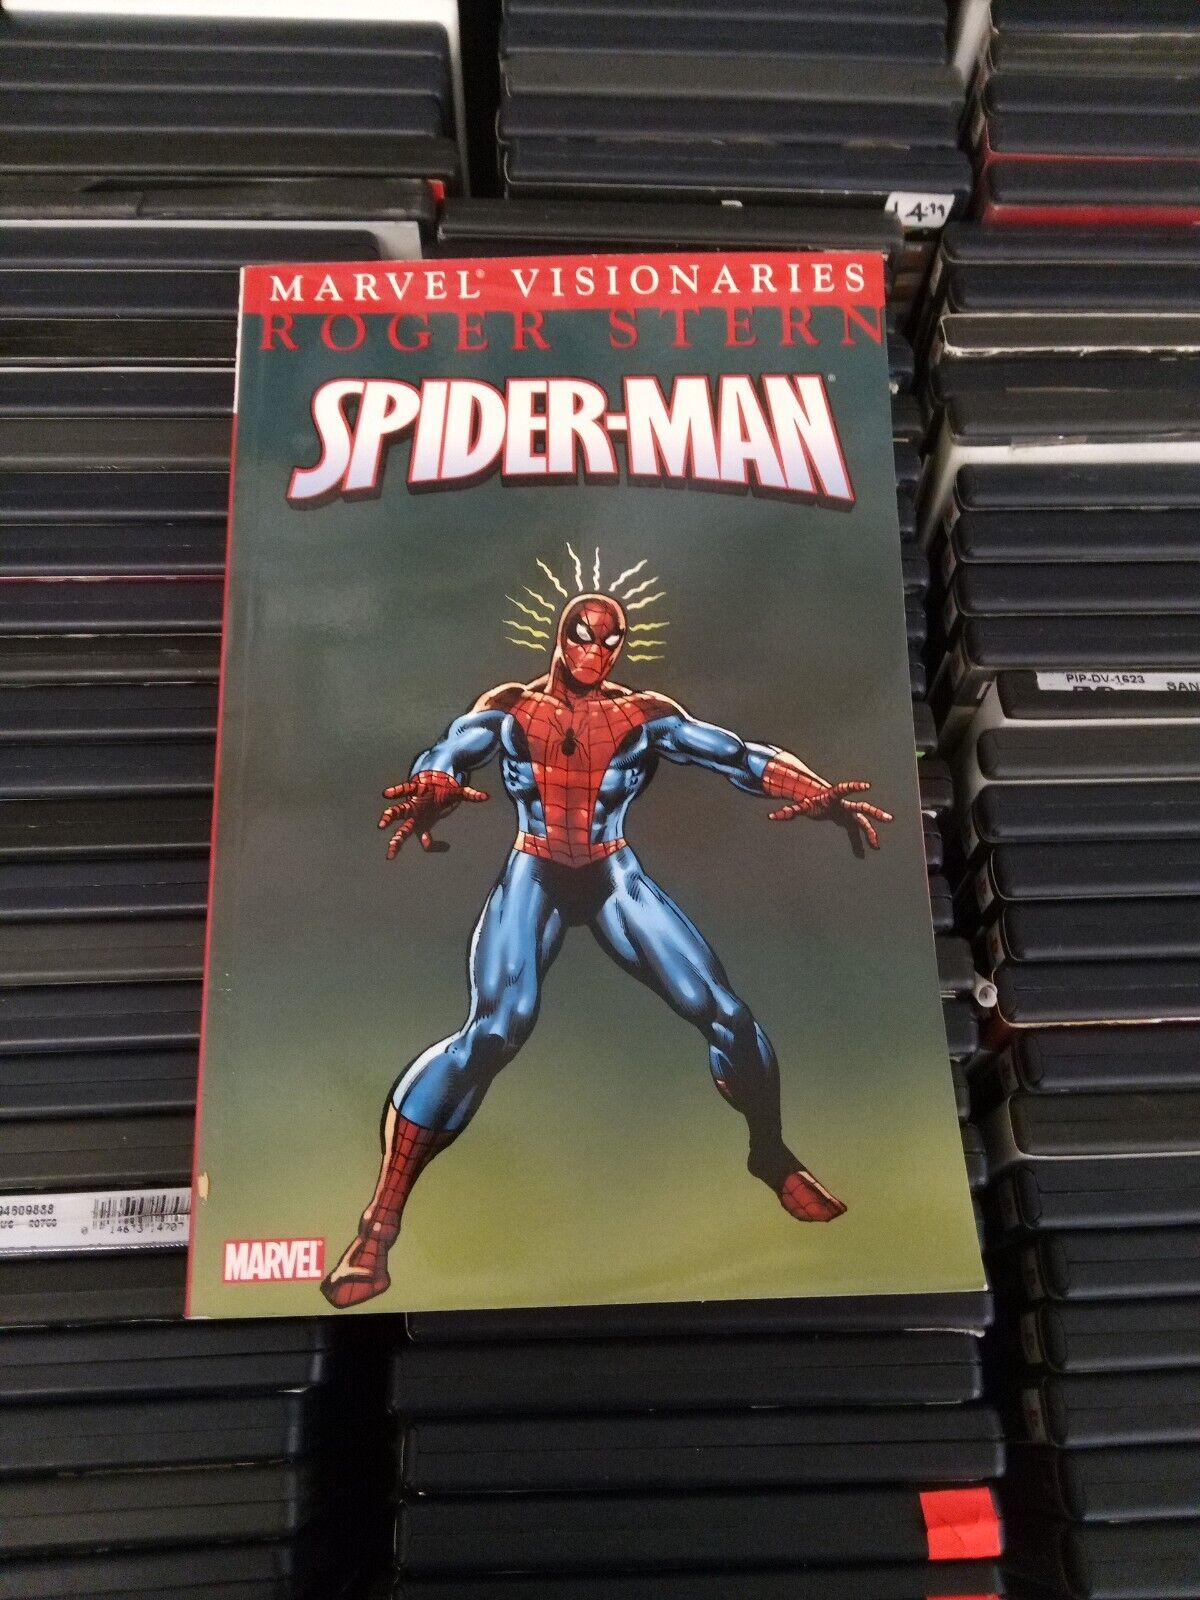 Spider-Man Visionaries: Roger Stern #1 (Marvel, April 2007)